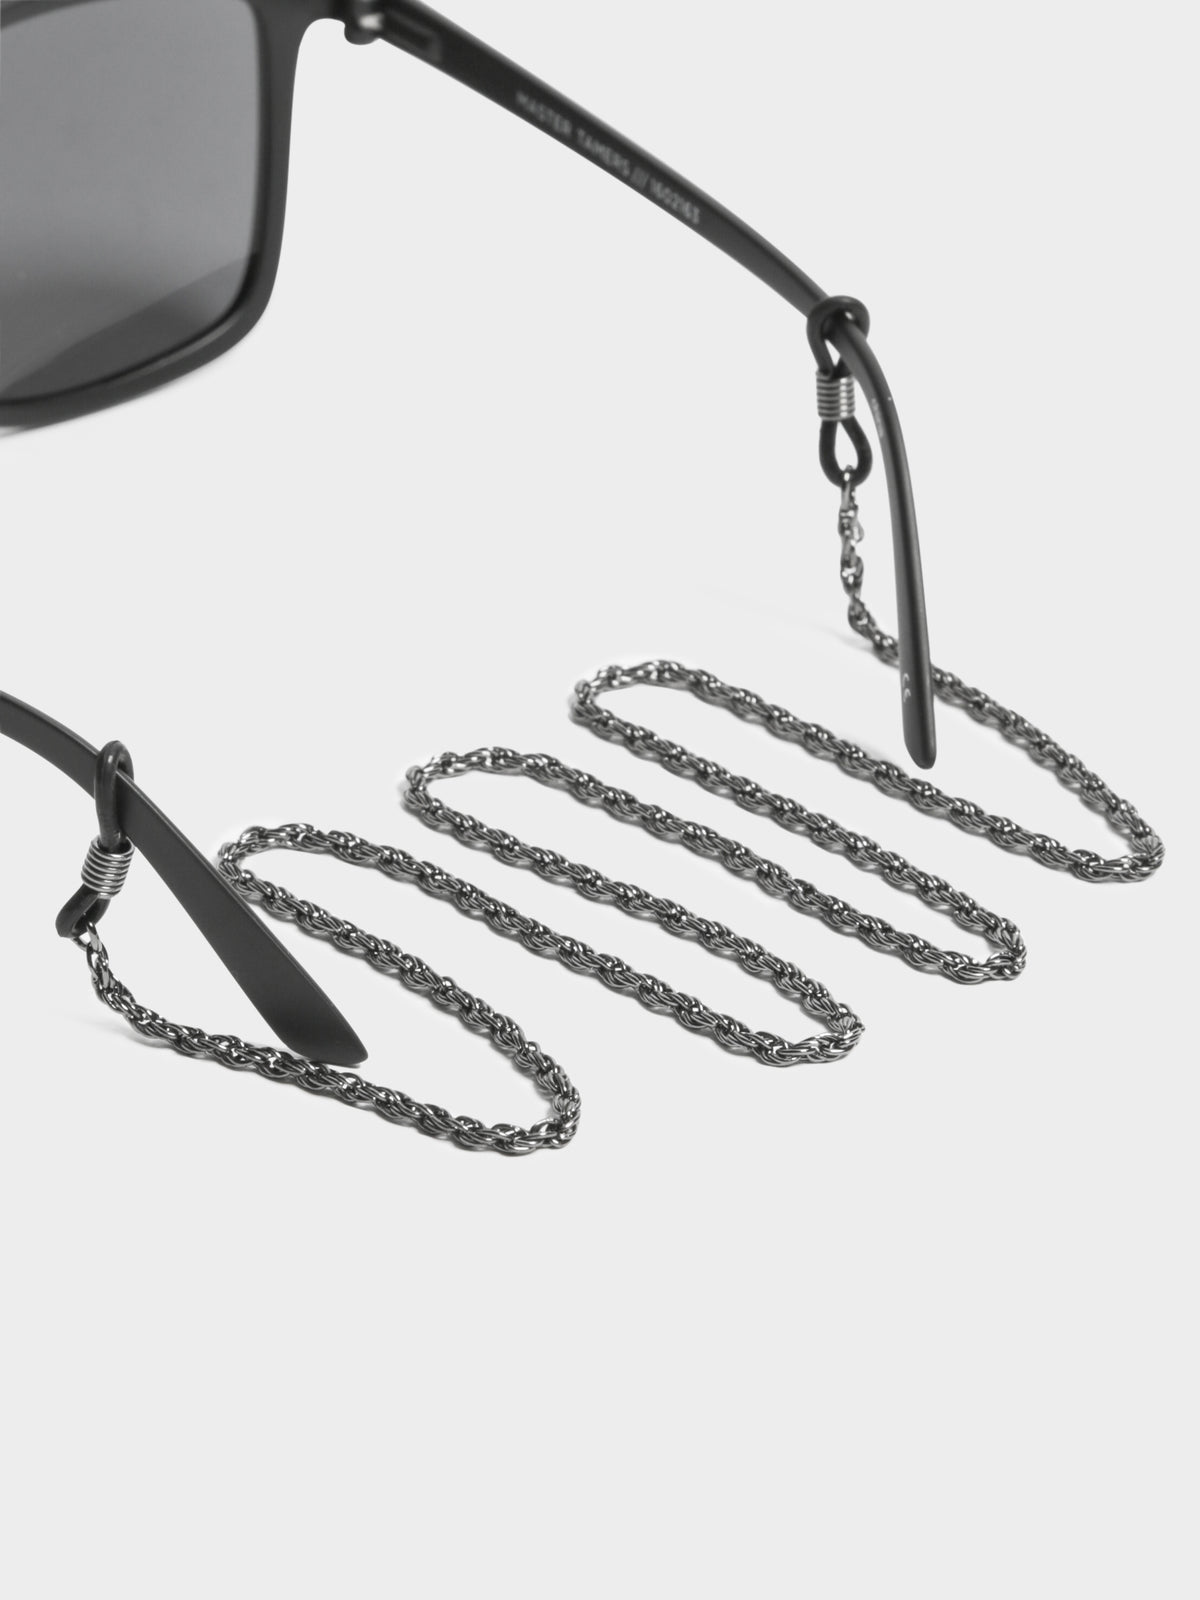 Sunglasses Neck Chain in Gunmetal Grey